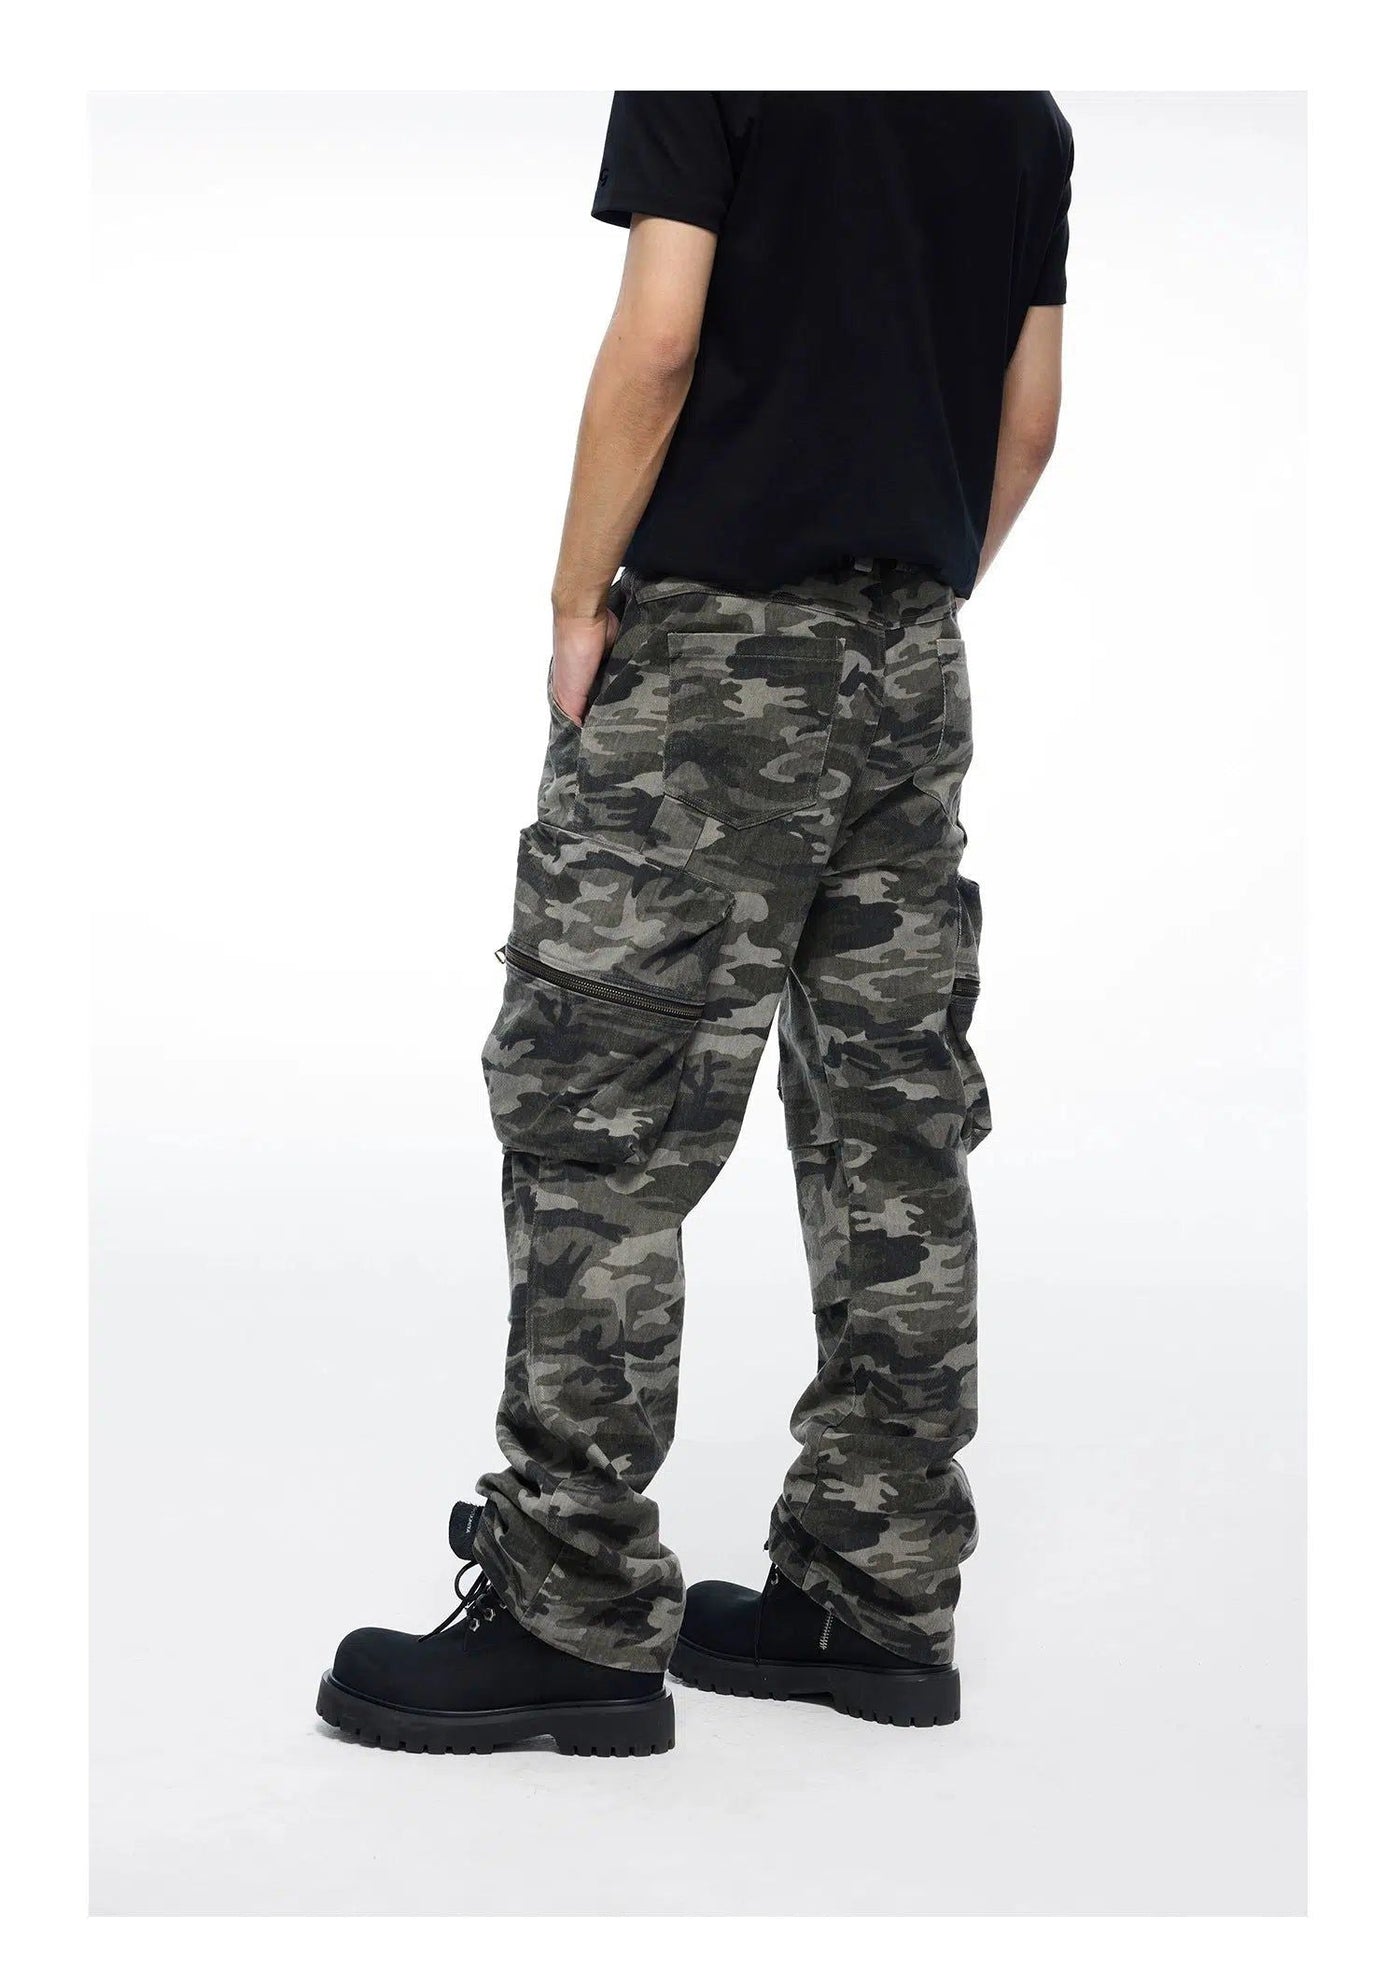 3D Pocket Camouflage Cargo Pants Korean Street Fashion Pants By Terra Incognita Shop Online at OH Vault